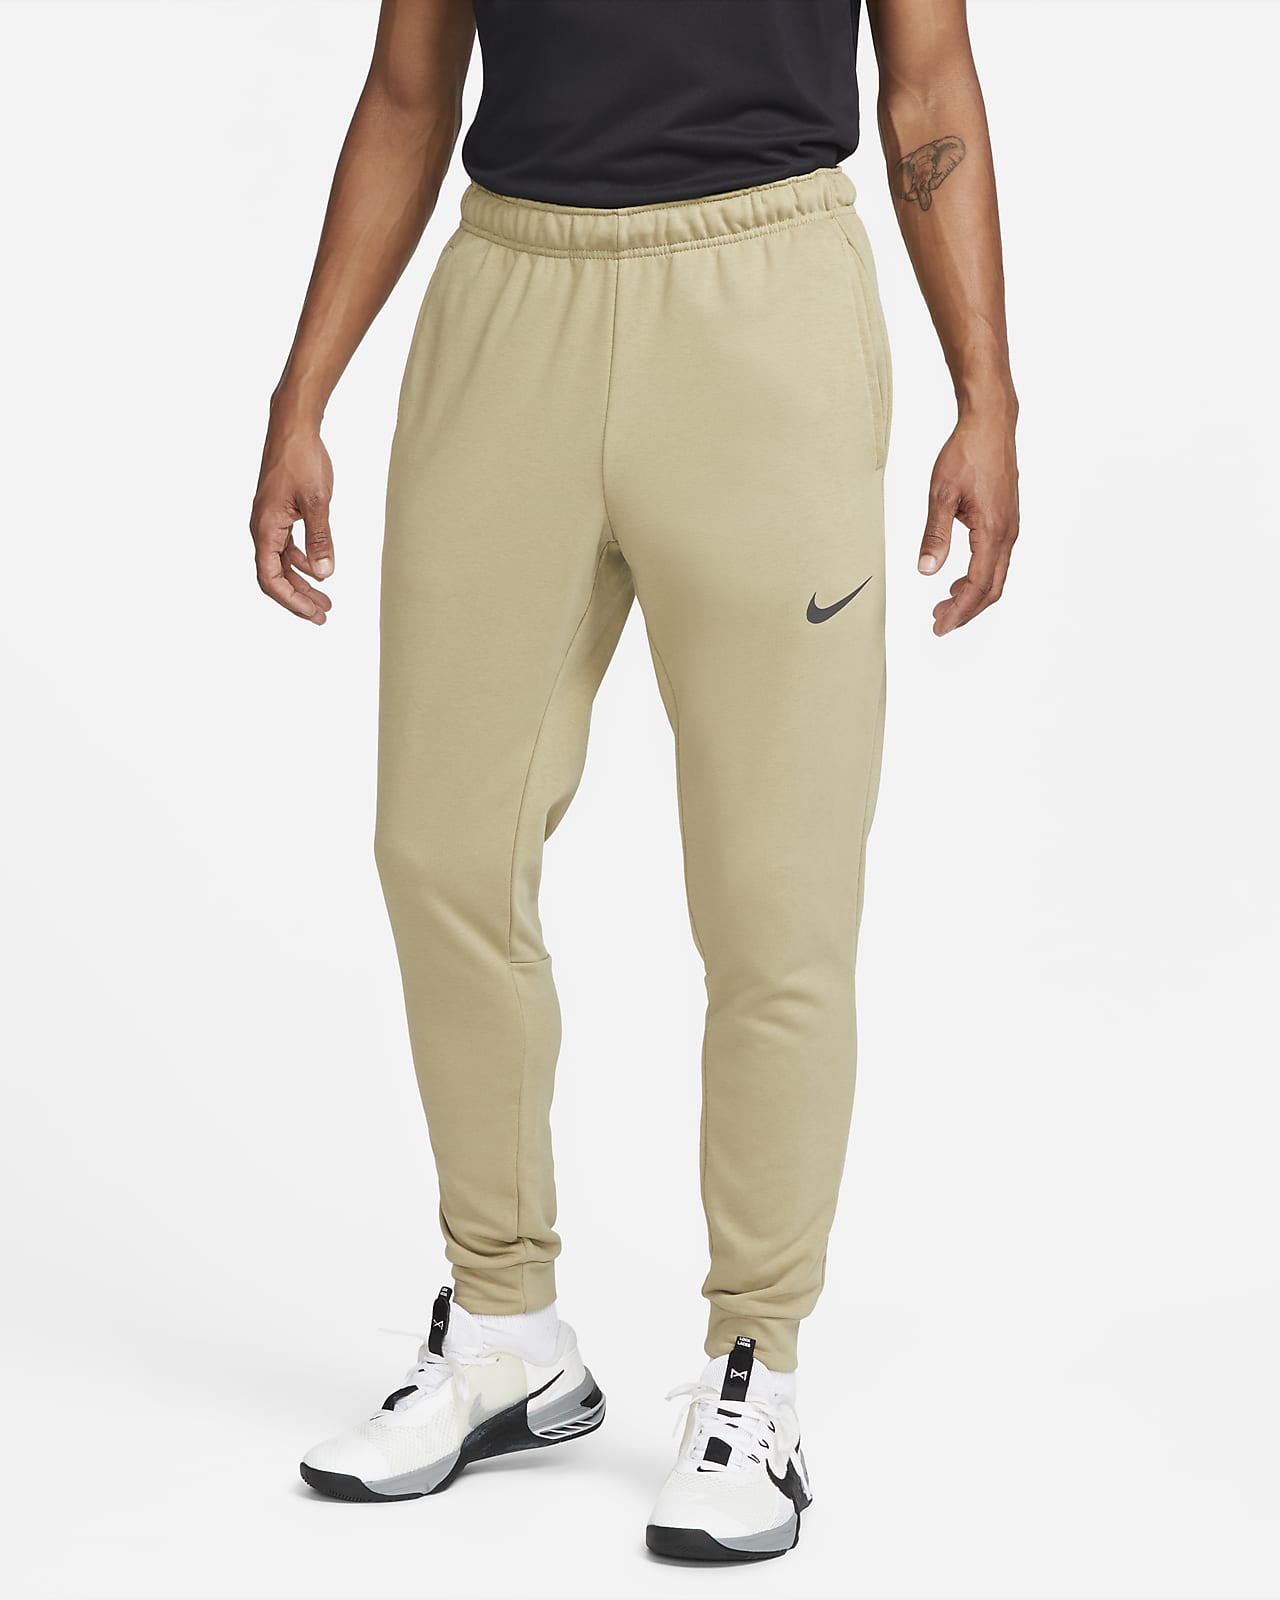 Pantaloni fitness Dri-FIT affusolati in fleece Nike Dry – Uomo